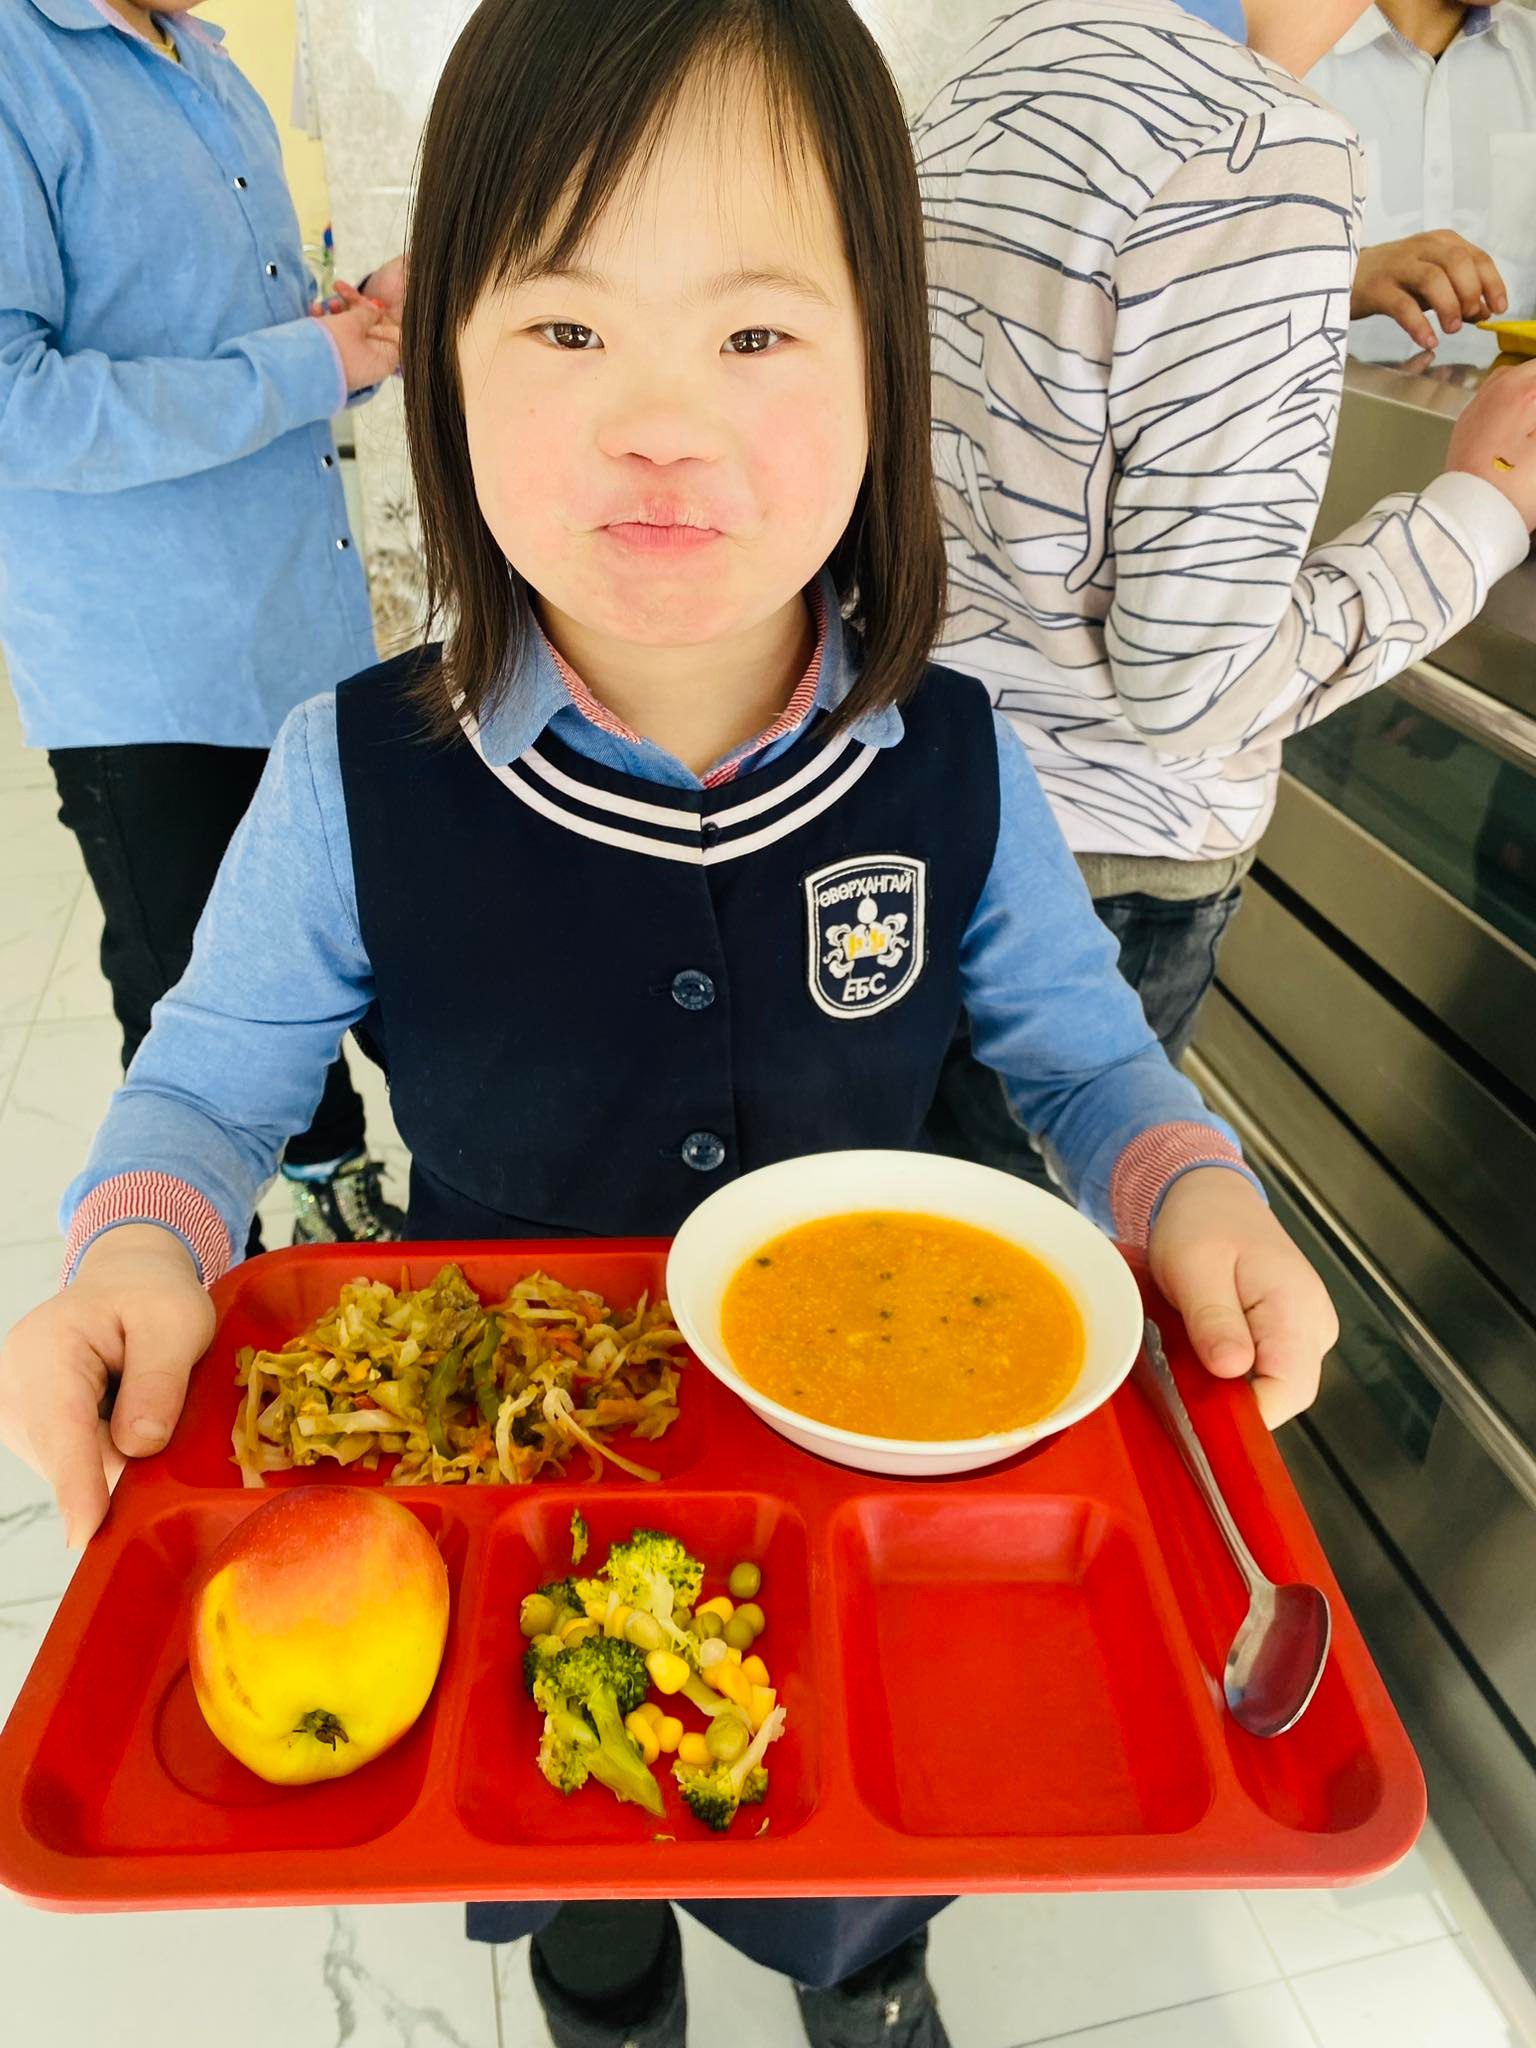 Little girl in school uniform smiles with school lunch.